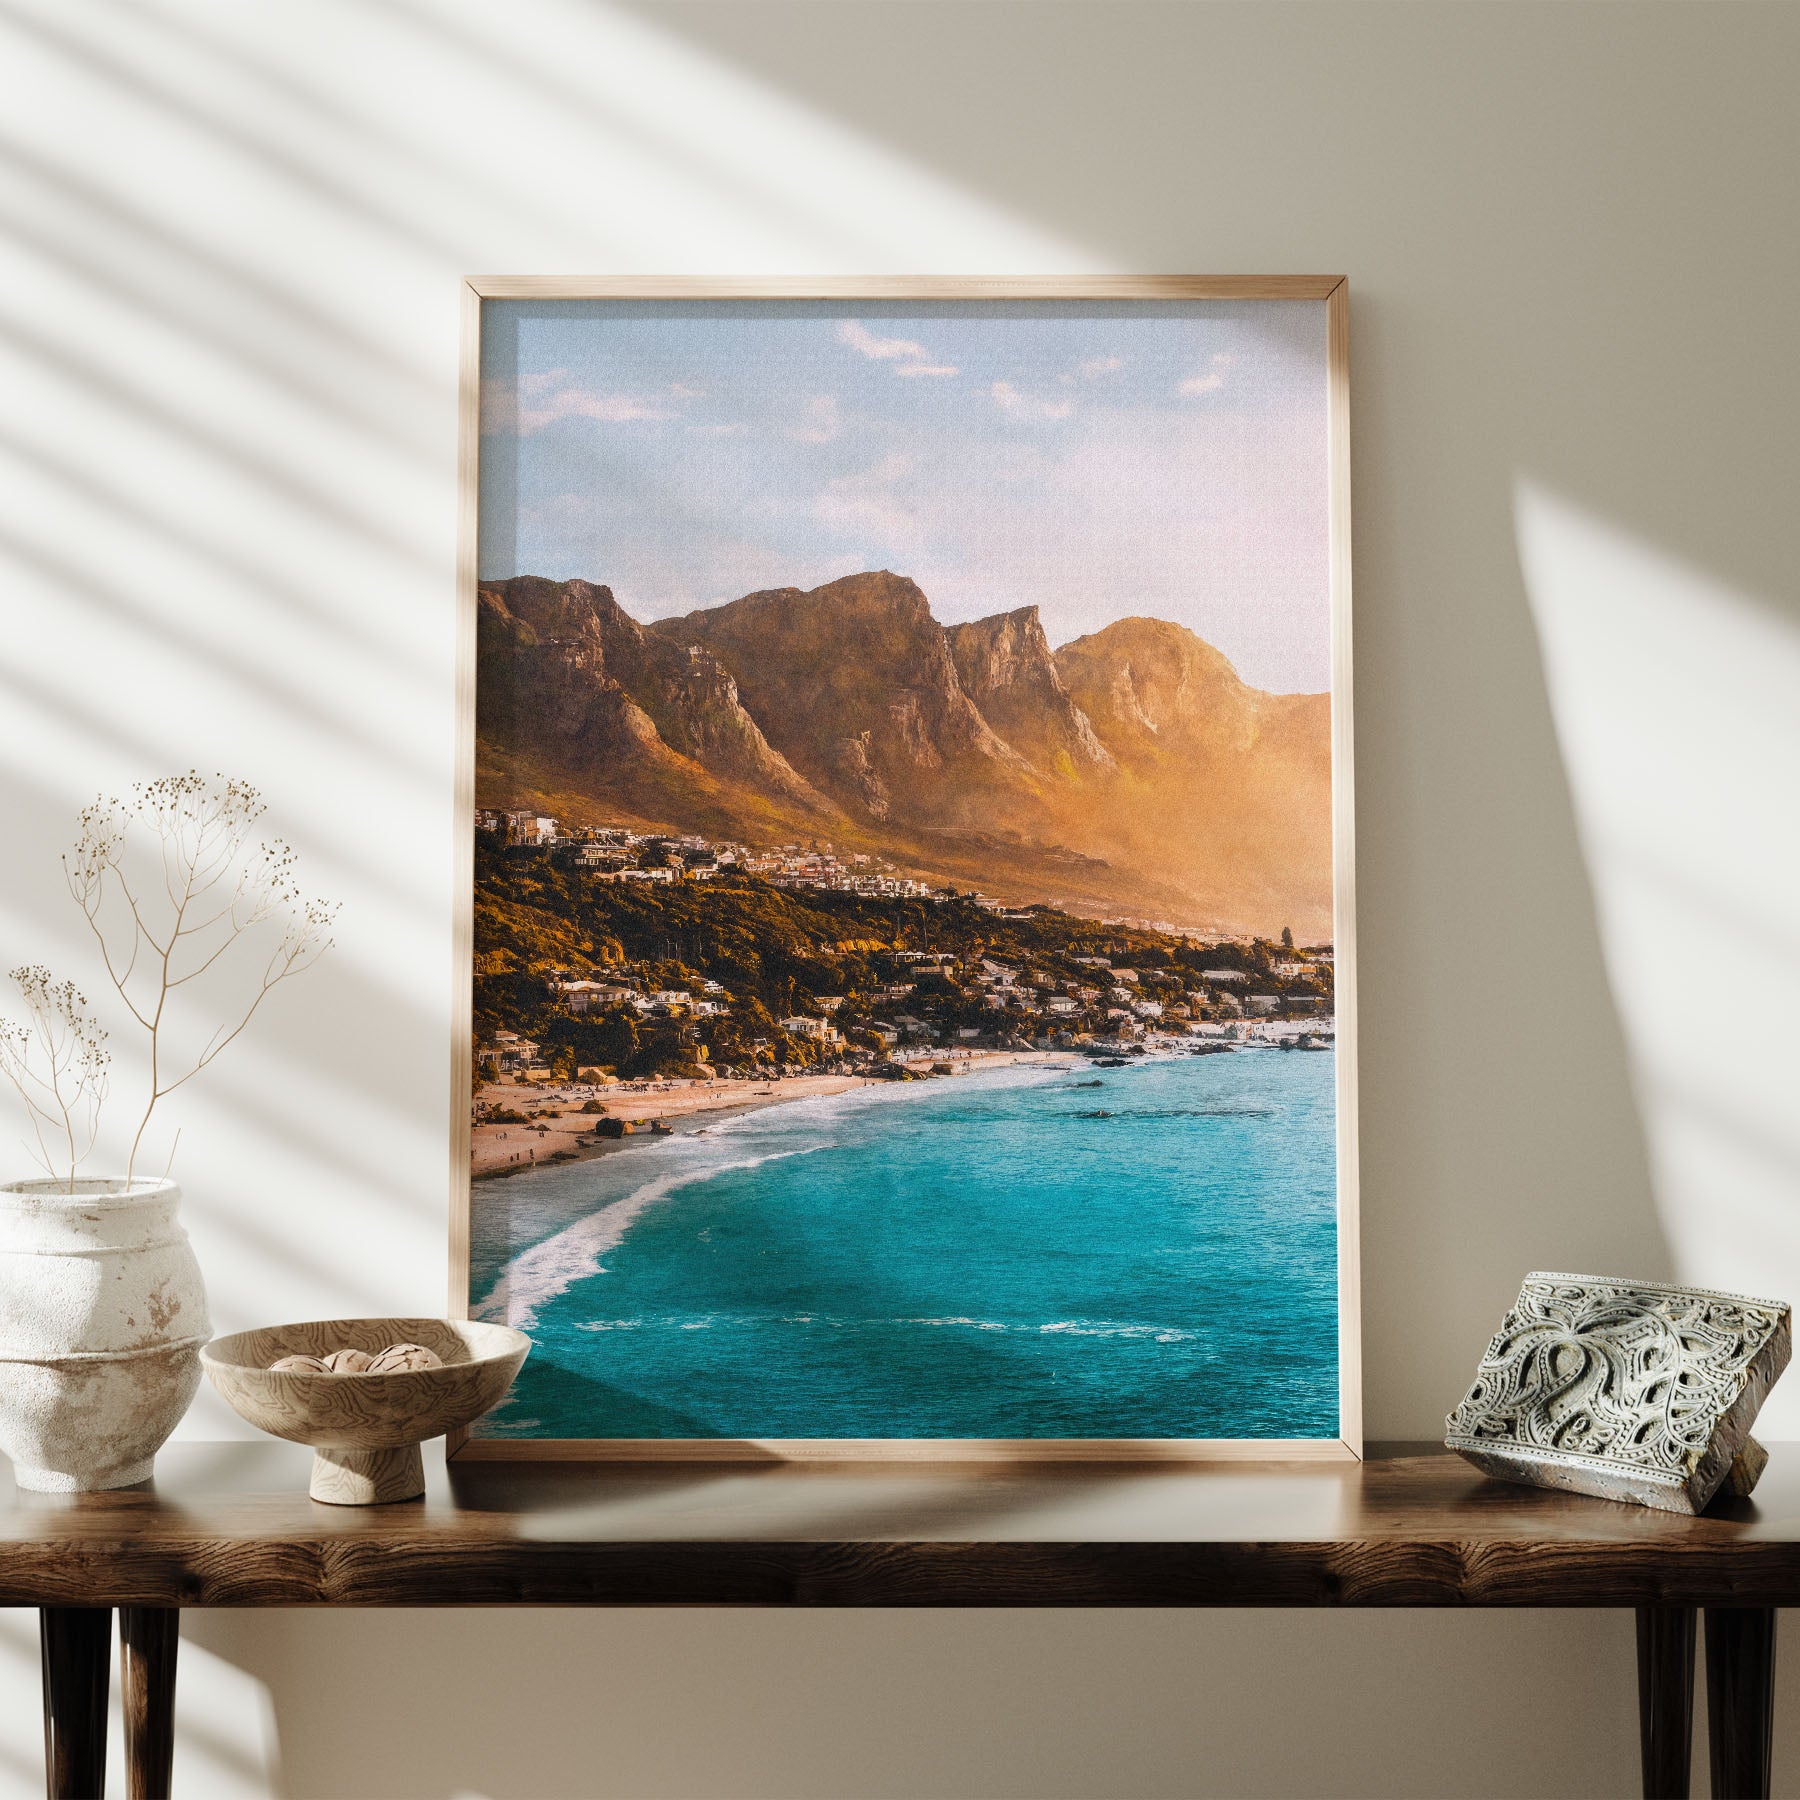 Cape Town - South Africa (Portrait Edition)